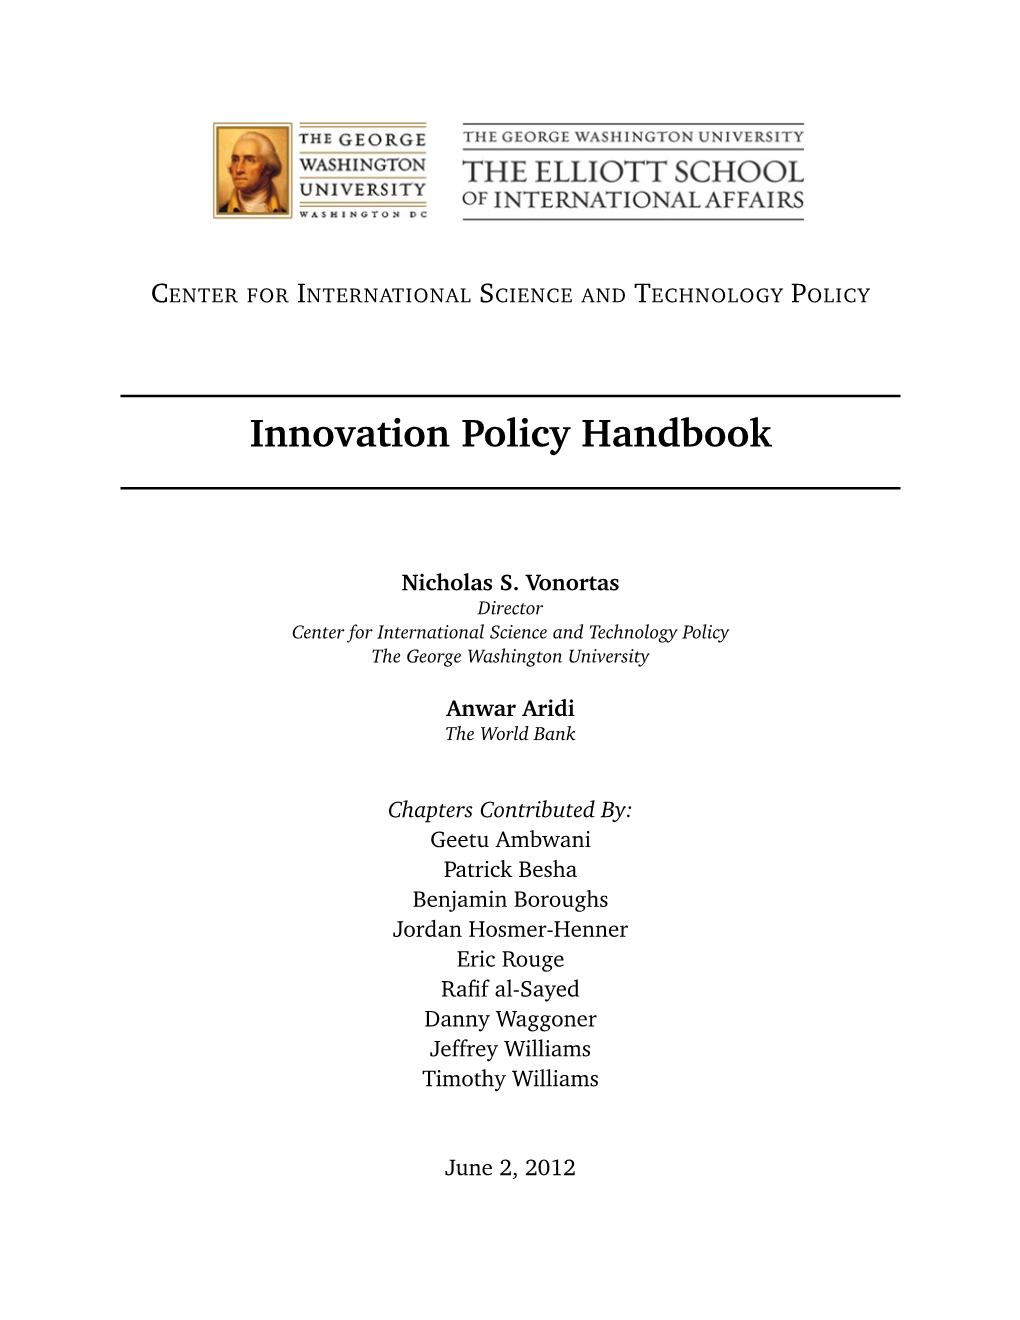 Innovation Policy Handbook